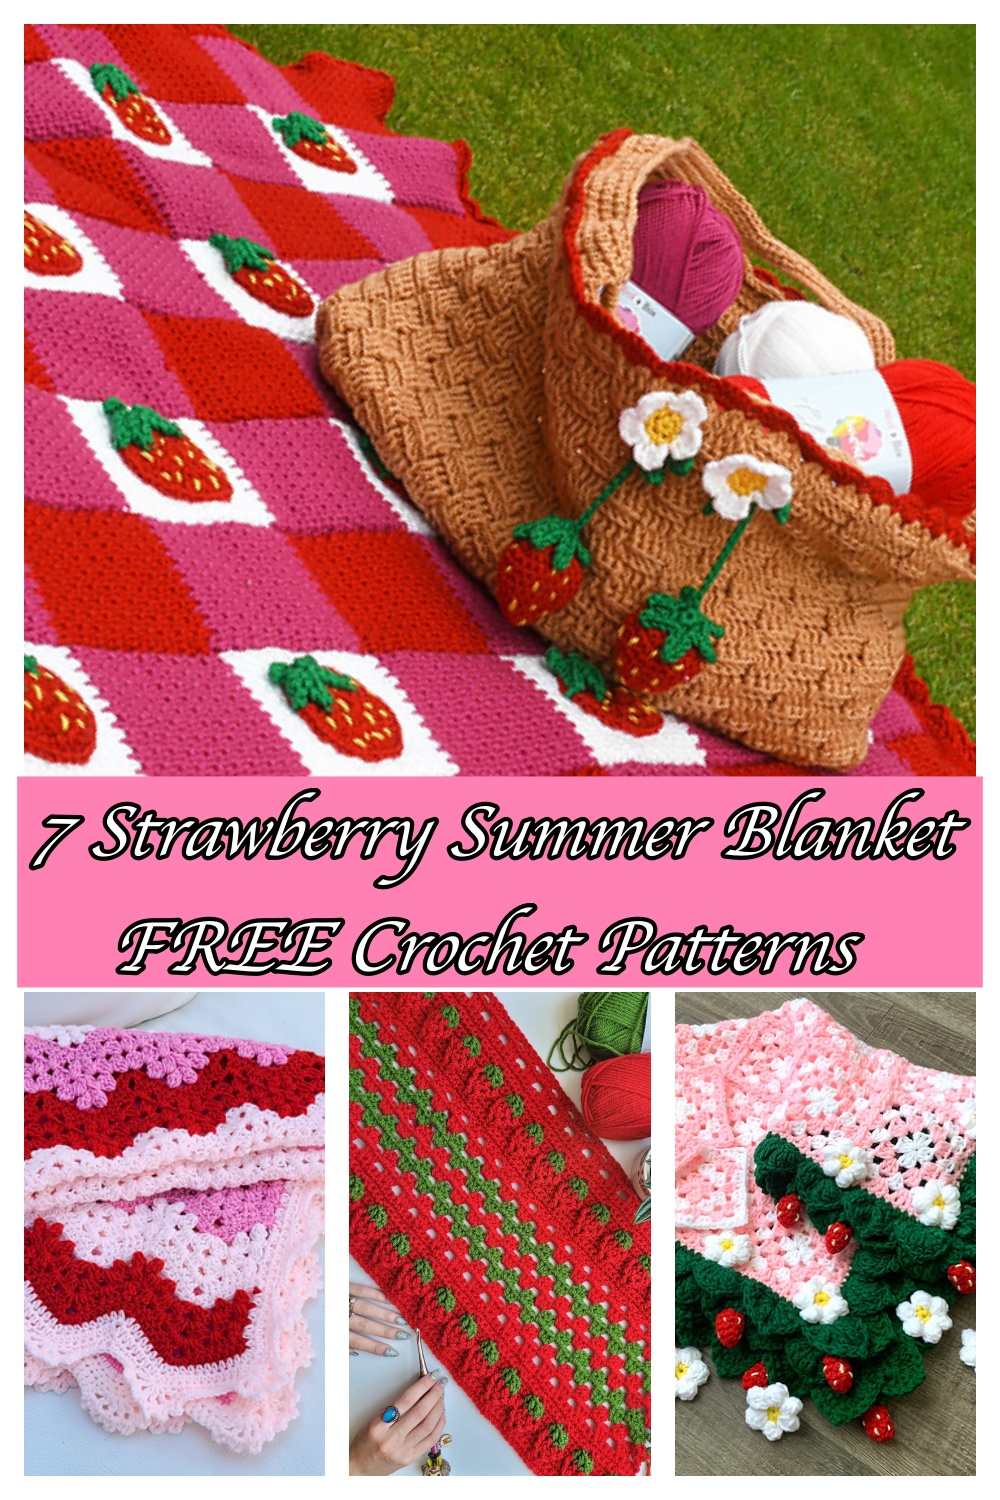 7 Strawberry Summer Blanket Crochet Patterns – FREE